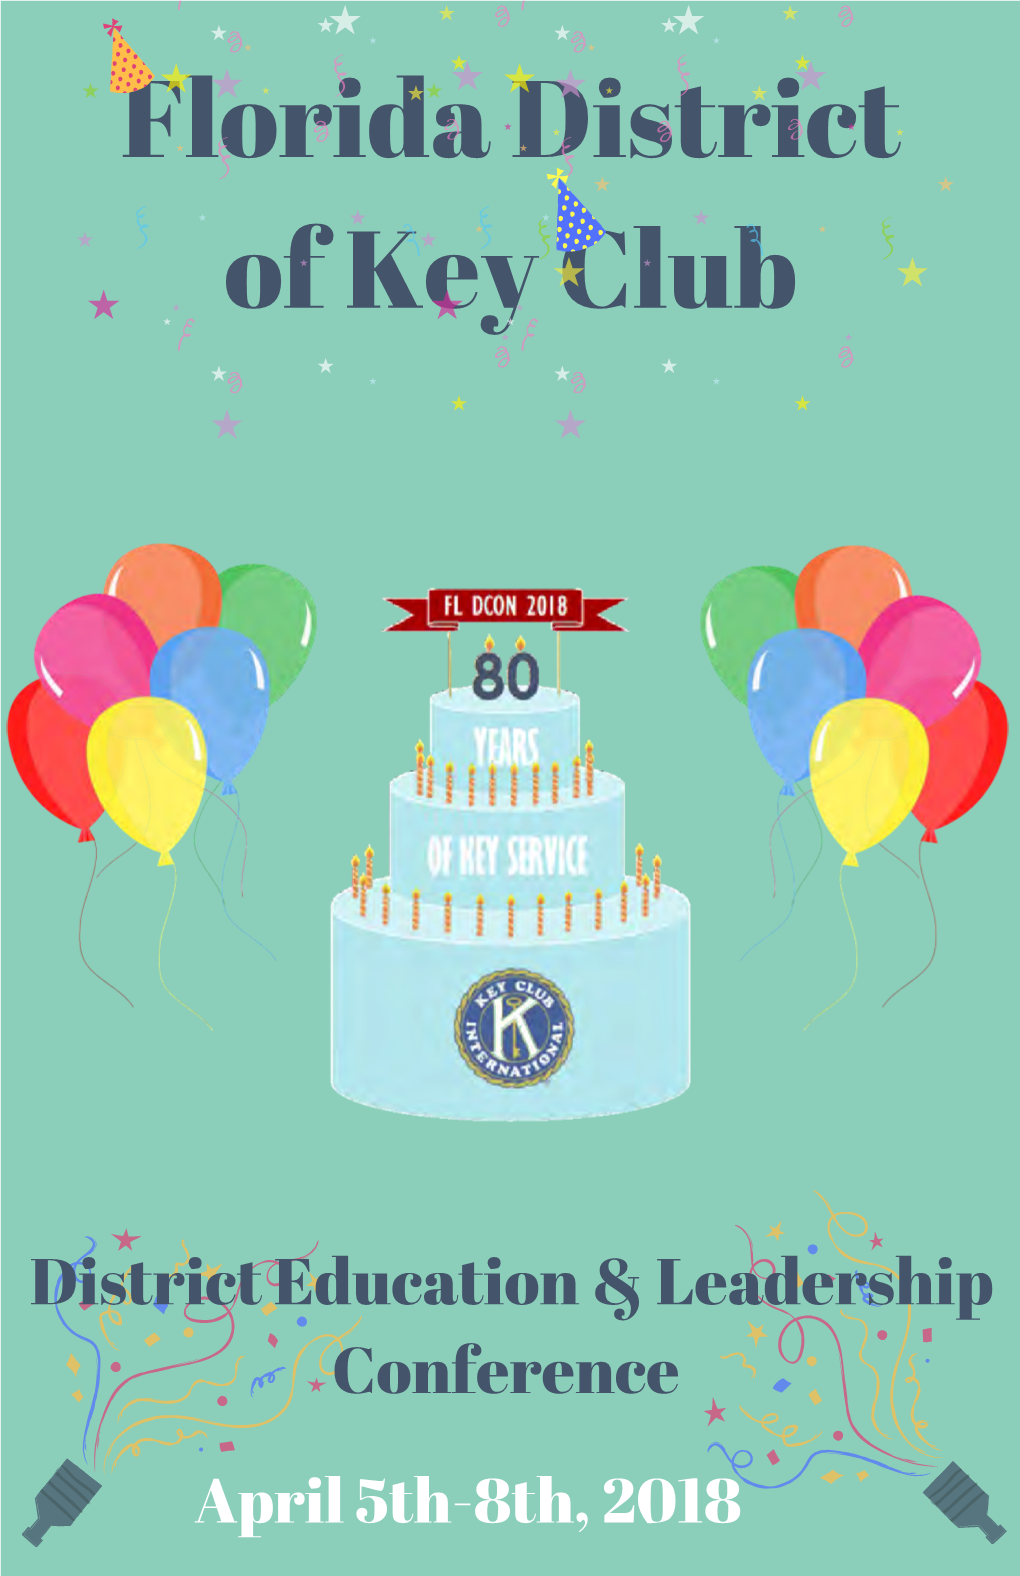 Florida District of Key Club